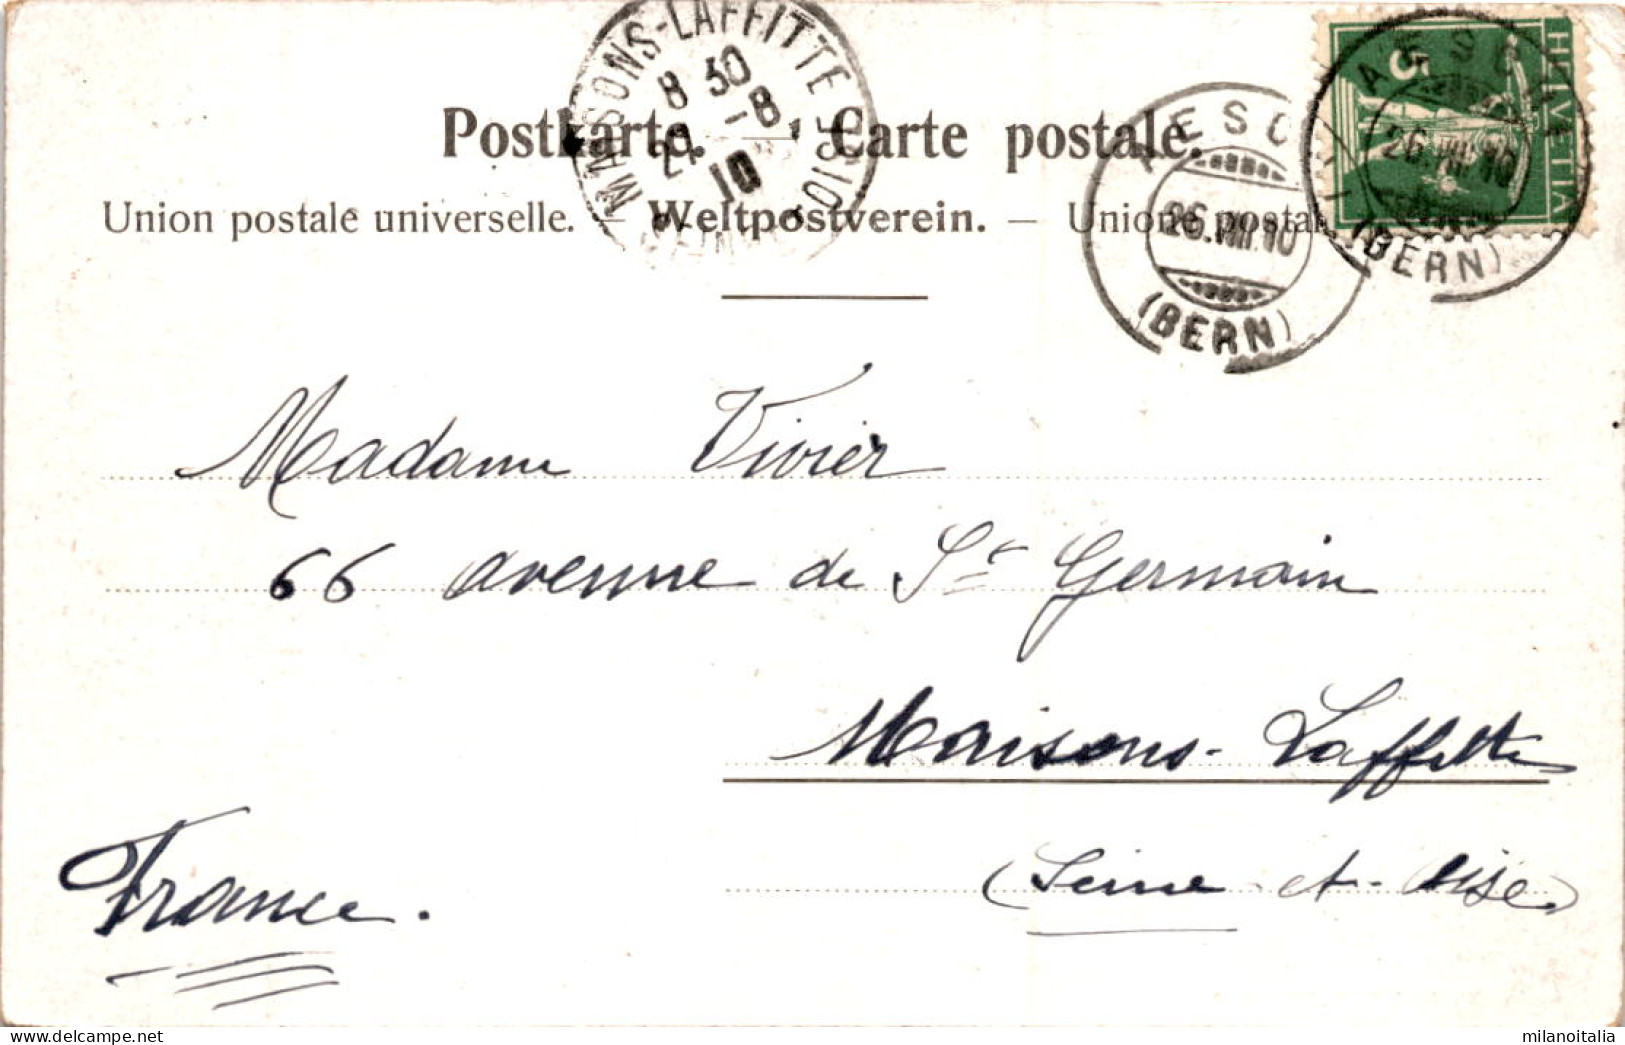 Aeschi (7309) * 26. 8. 1910 - Aeschi Bei Spiez